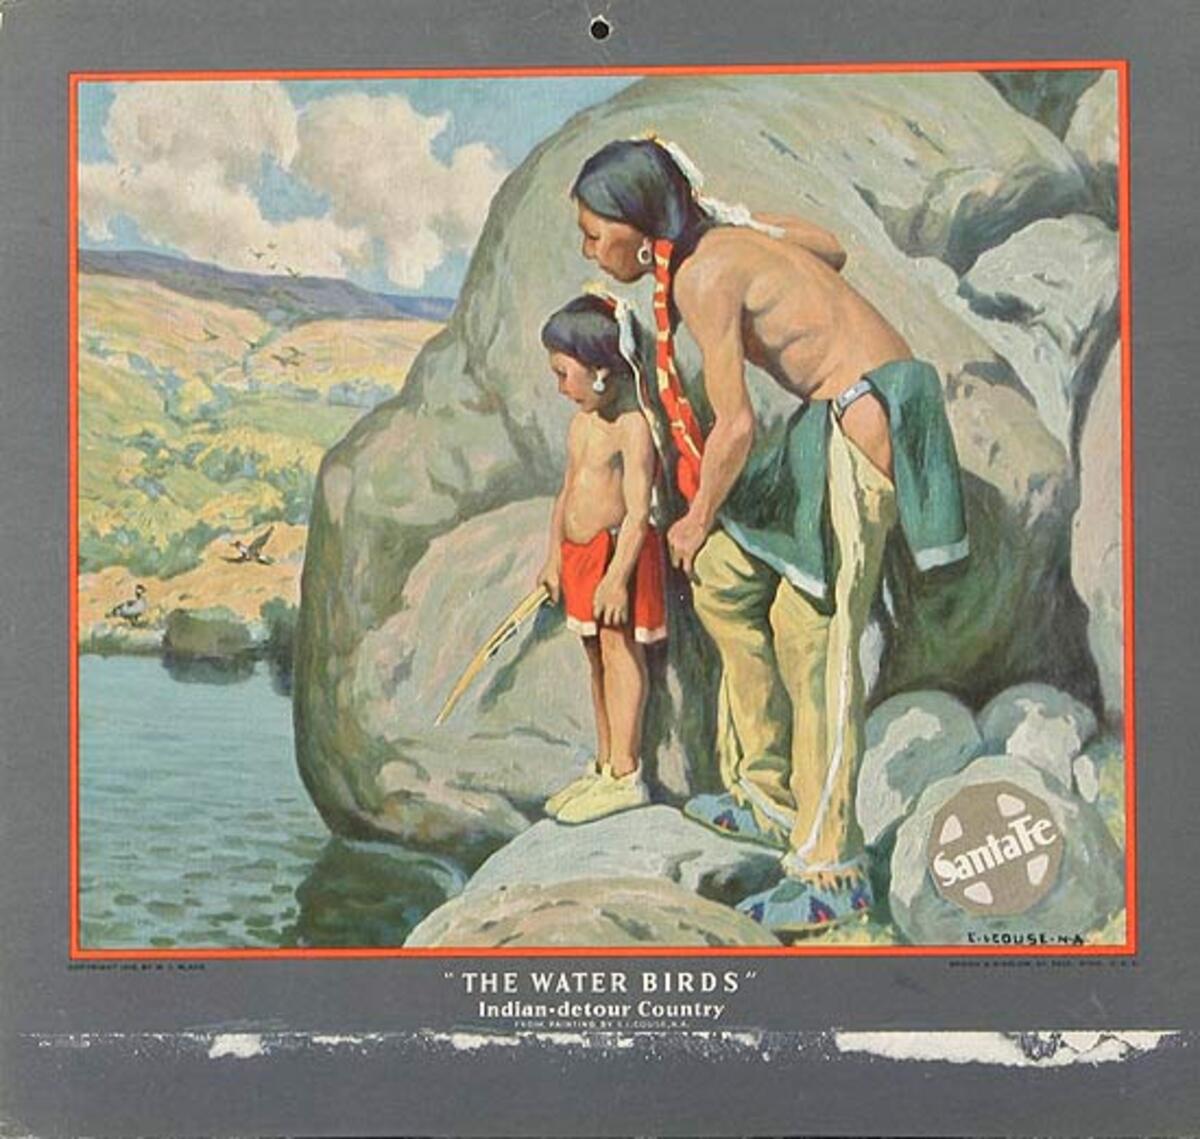 The Water Birds Indian-detour Country Original Santa Fe Railroad Advertising Calendar